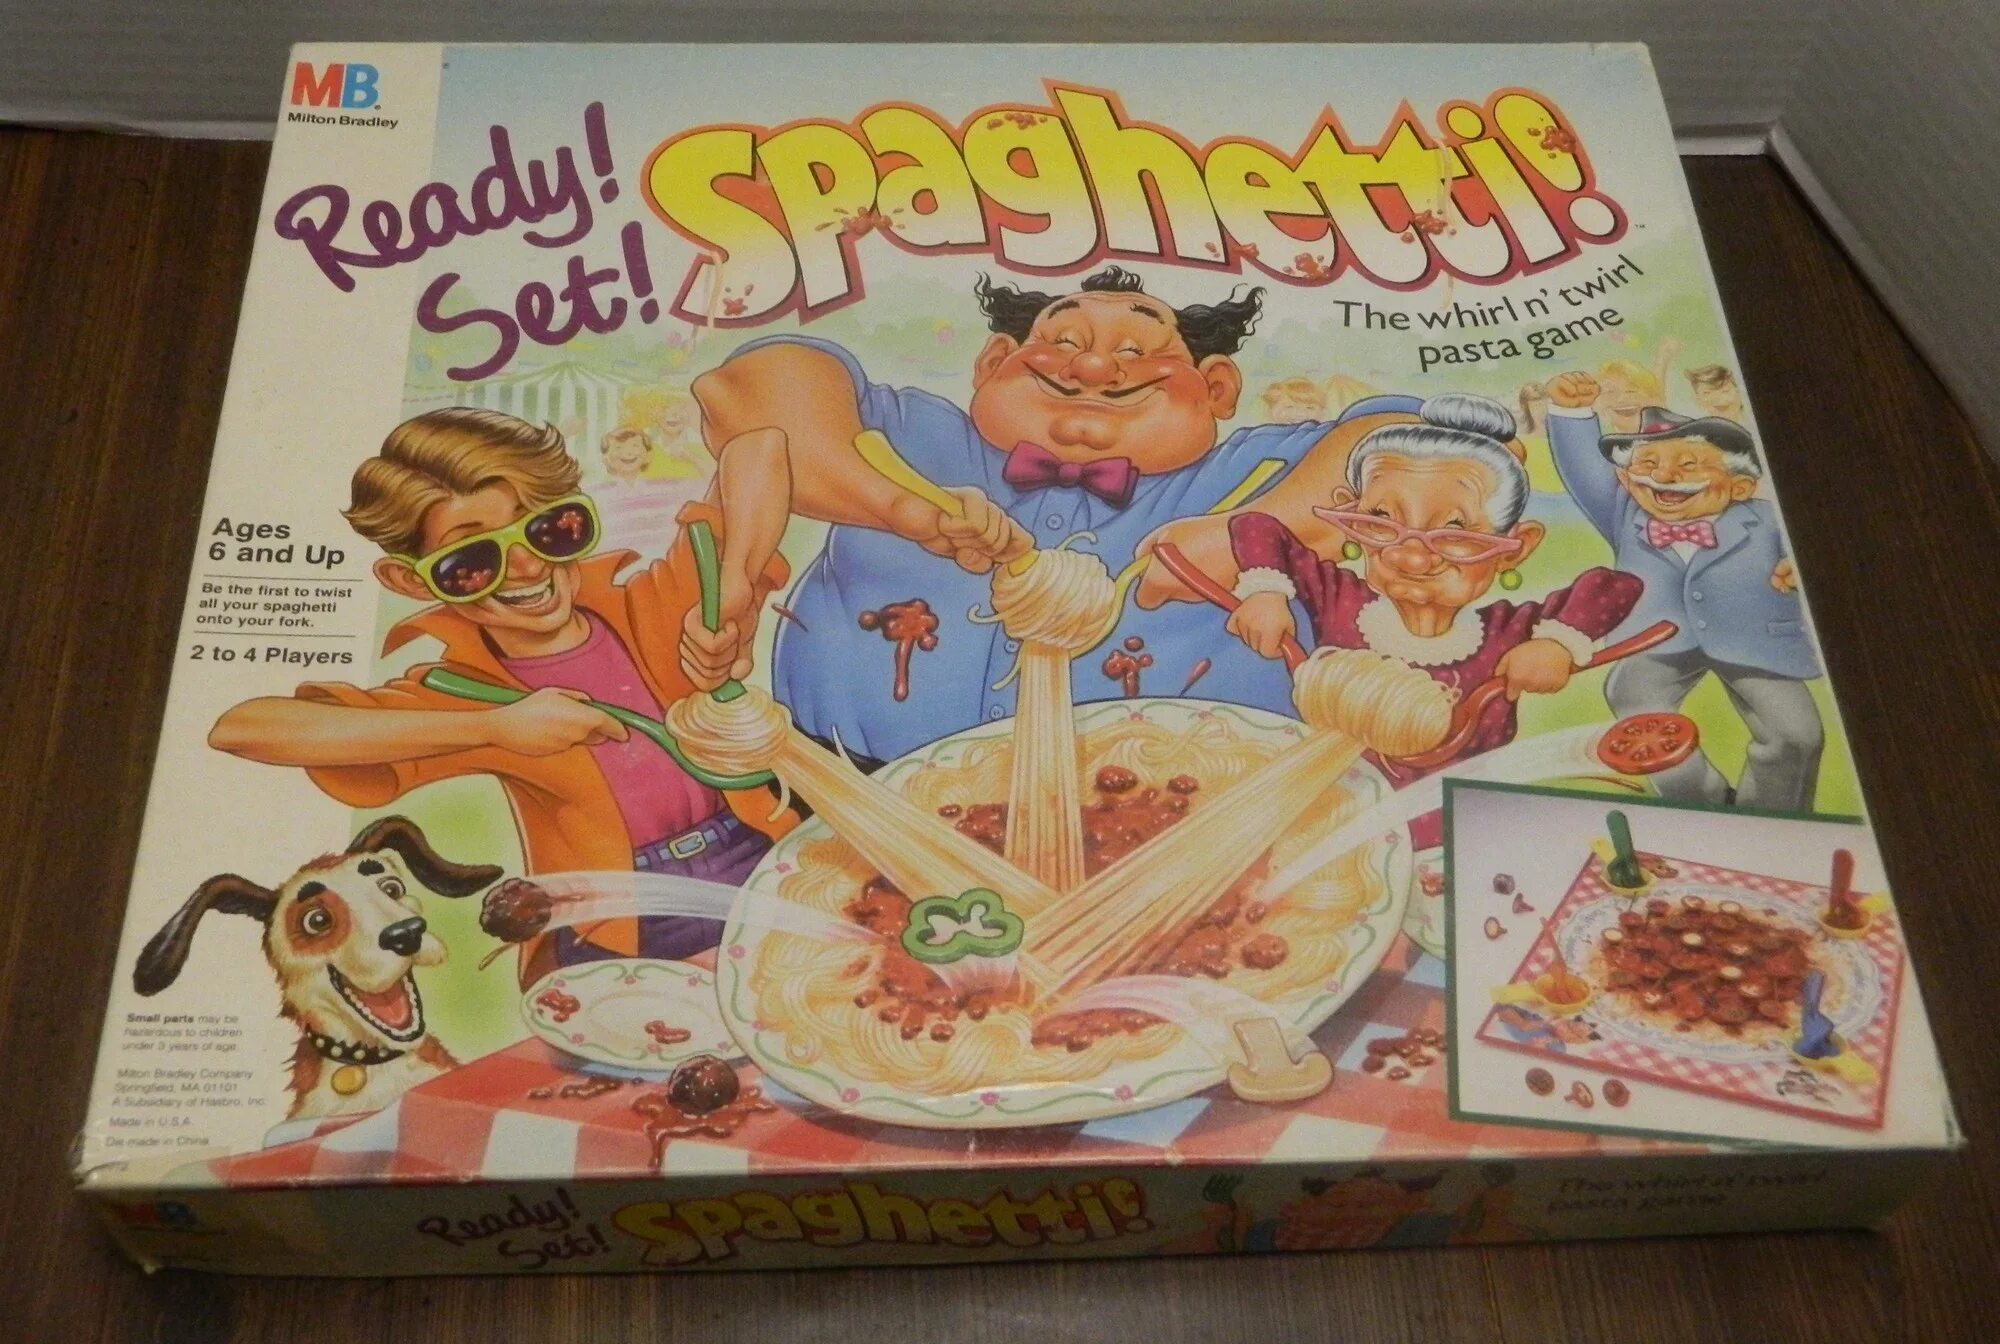 Игра ready Spaghetti. Ready Spaghetti настольная игра. Настольная игра шустрые спагетти. Настольная игра "спагетти". Игра где ломаешь спагетти